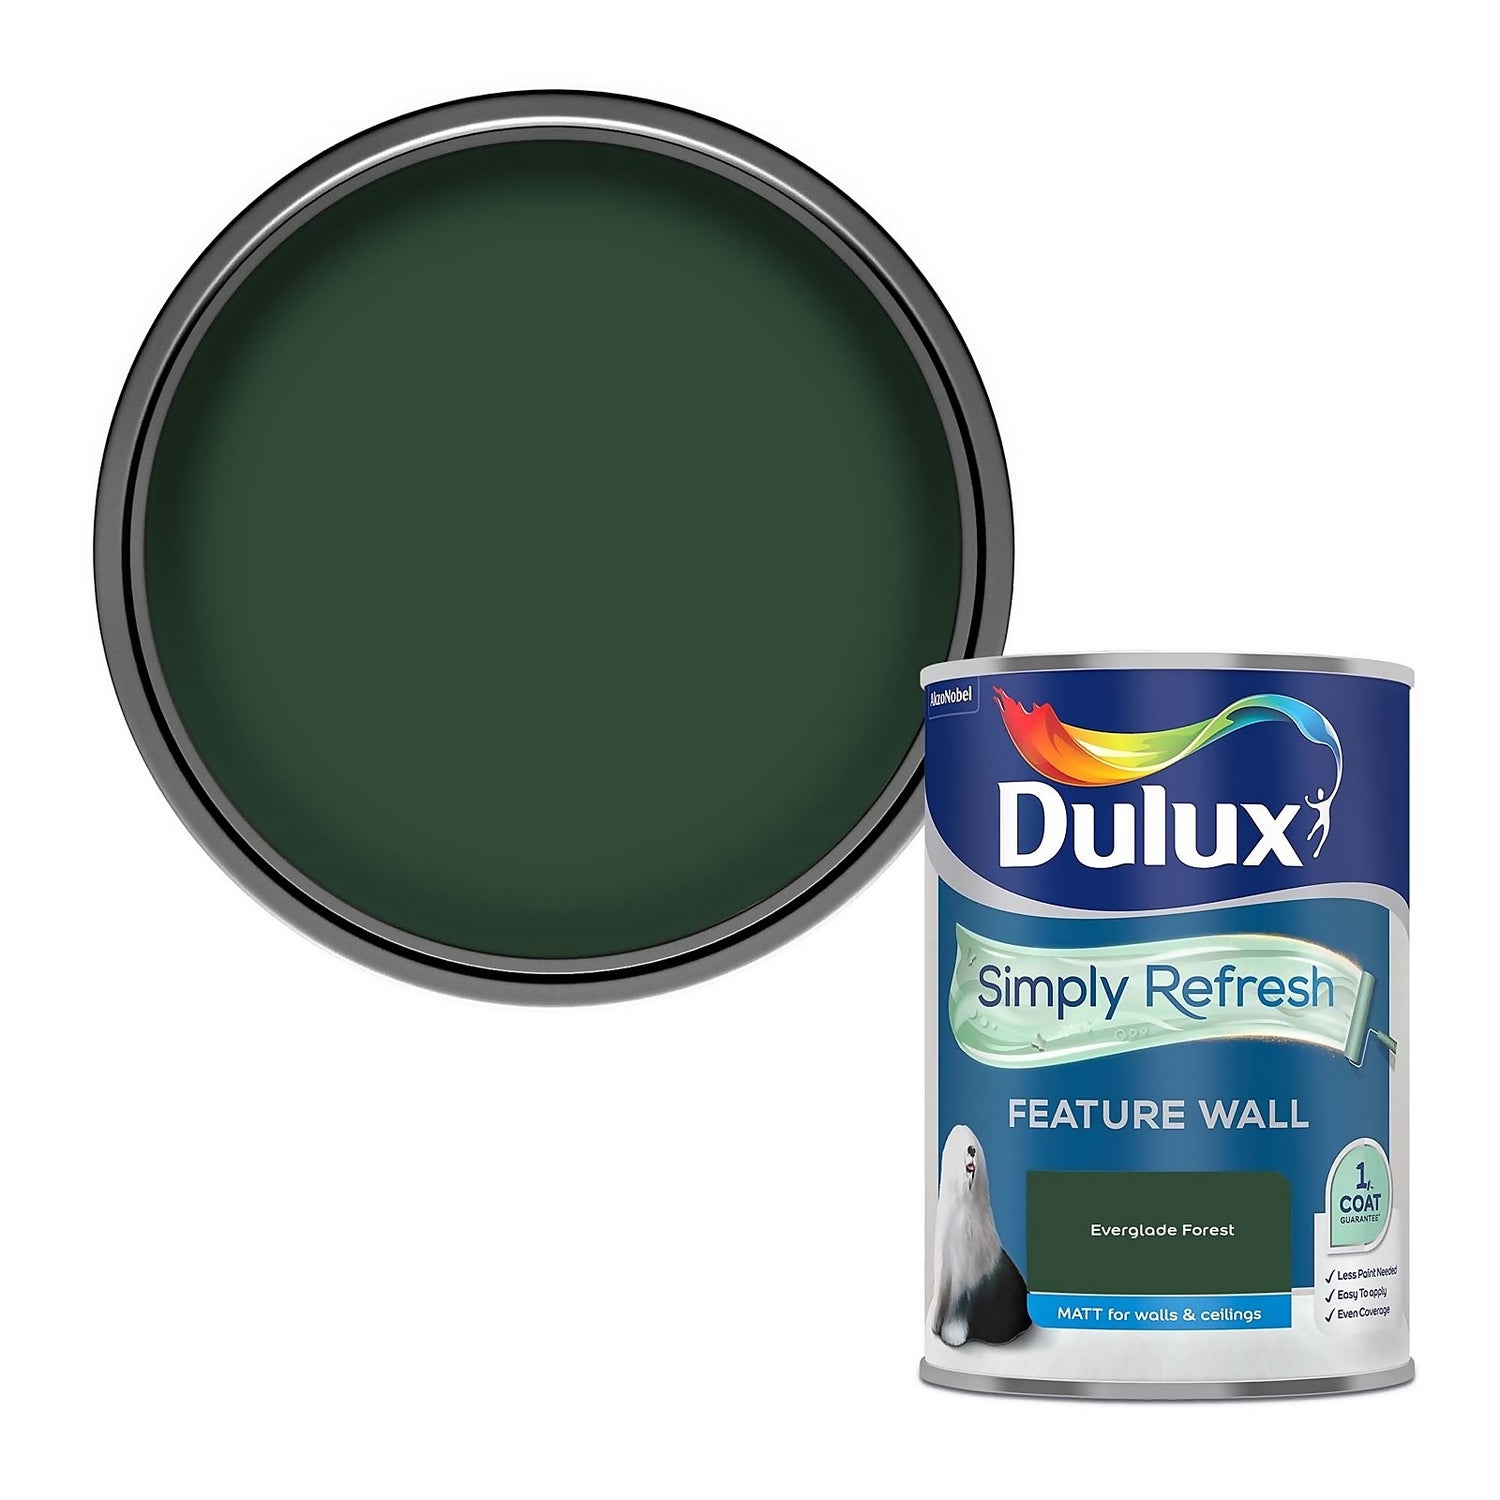 Dulux Simply Refresh Feature Wall One Coat Matt Emulsion Paint